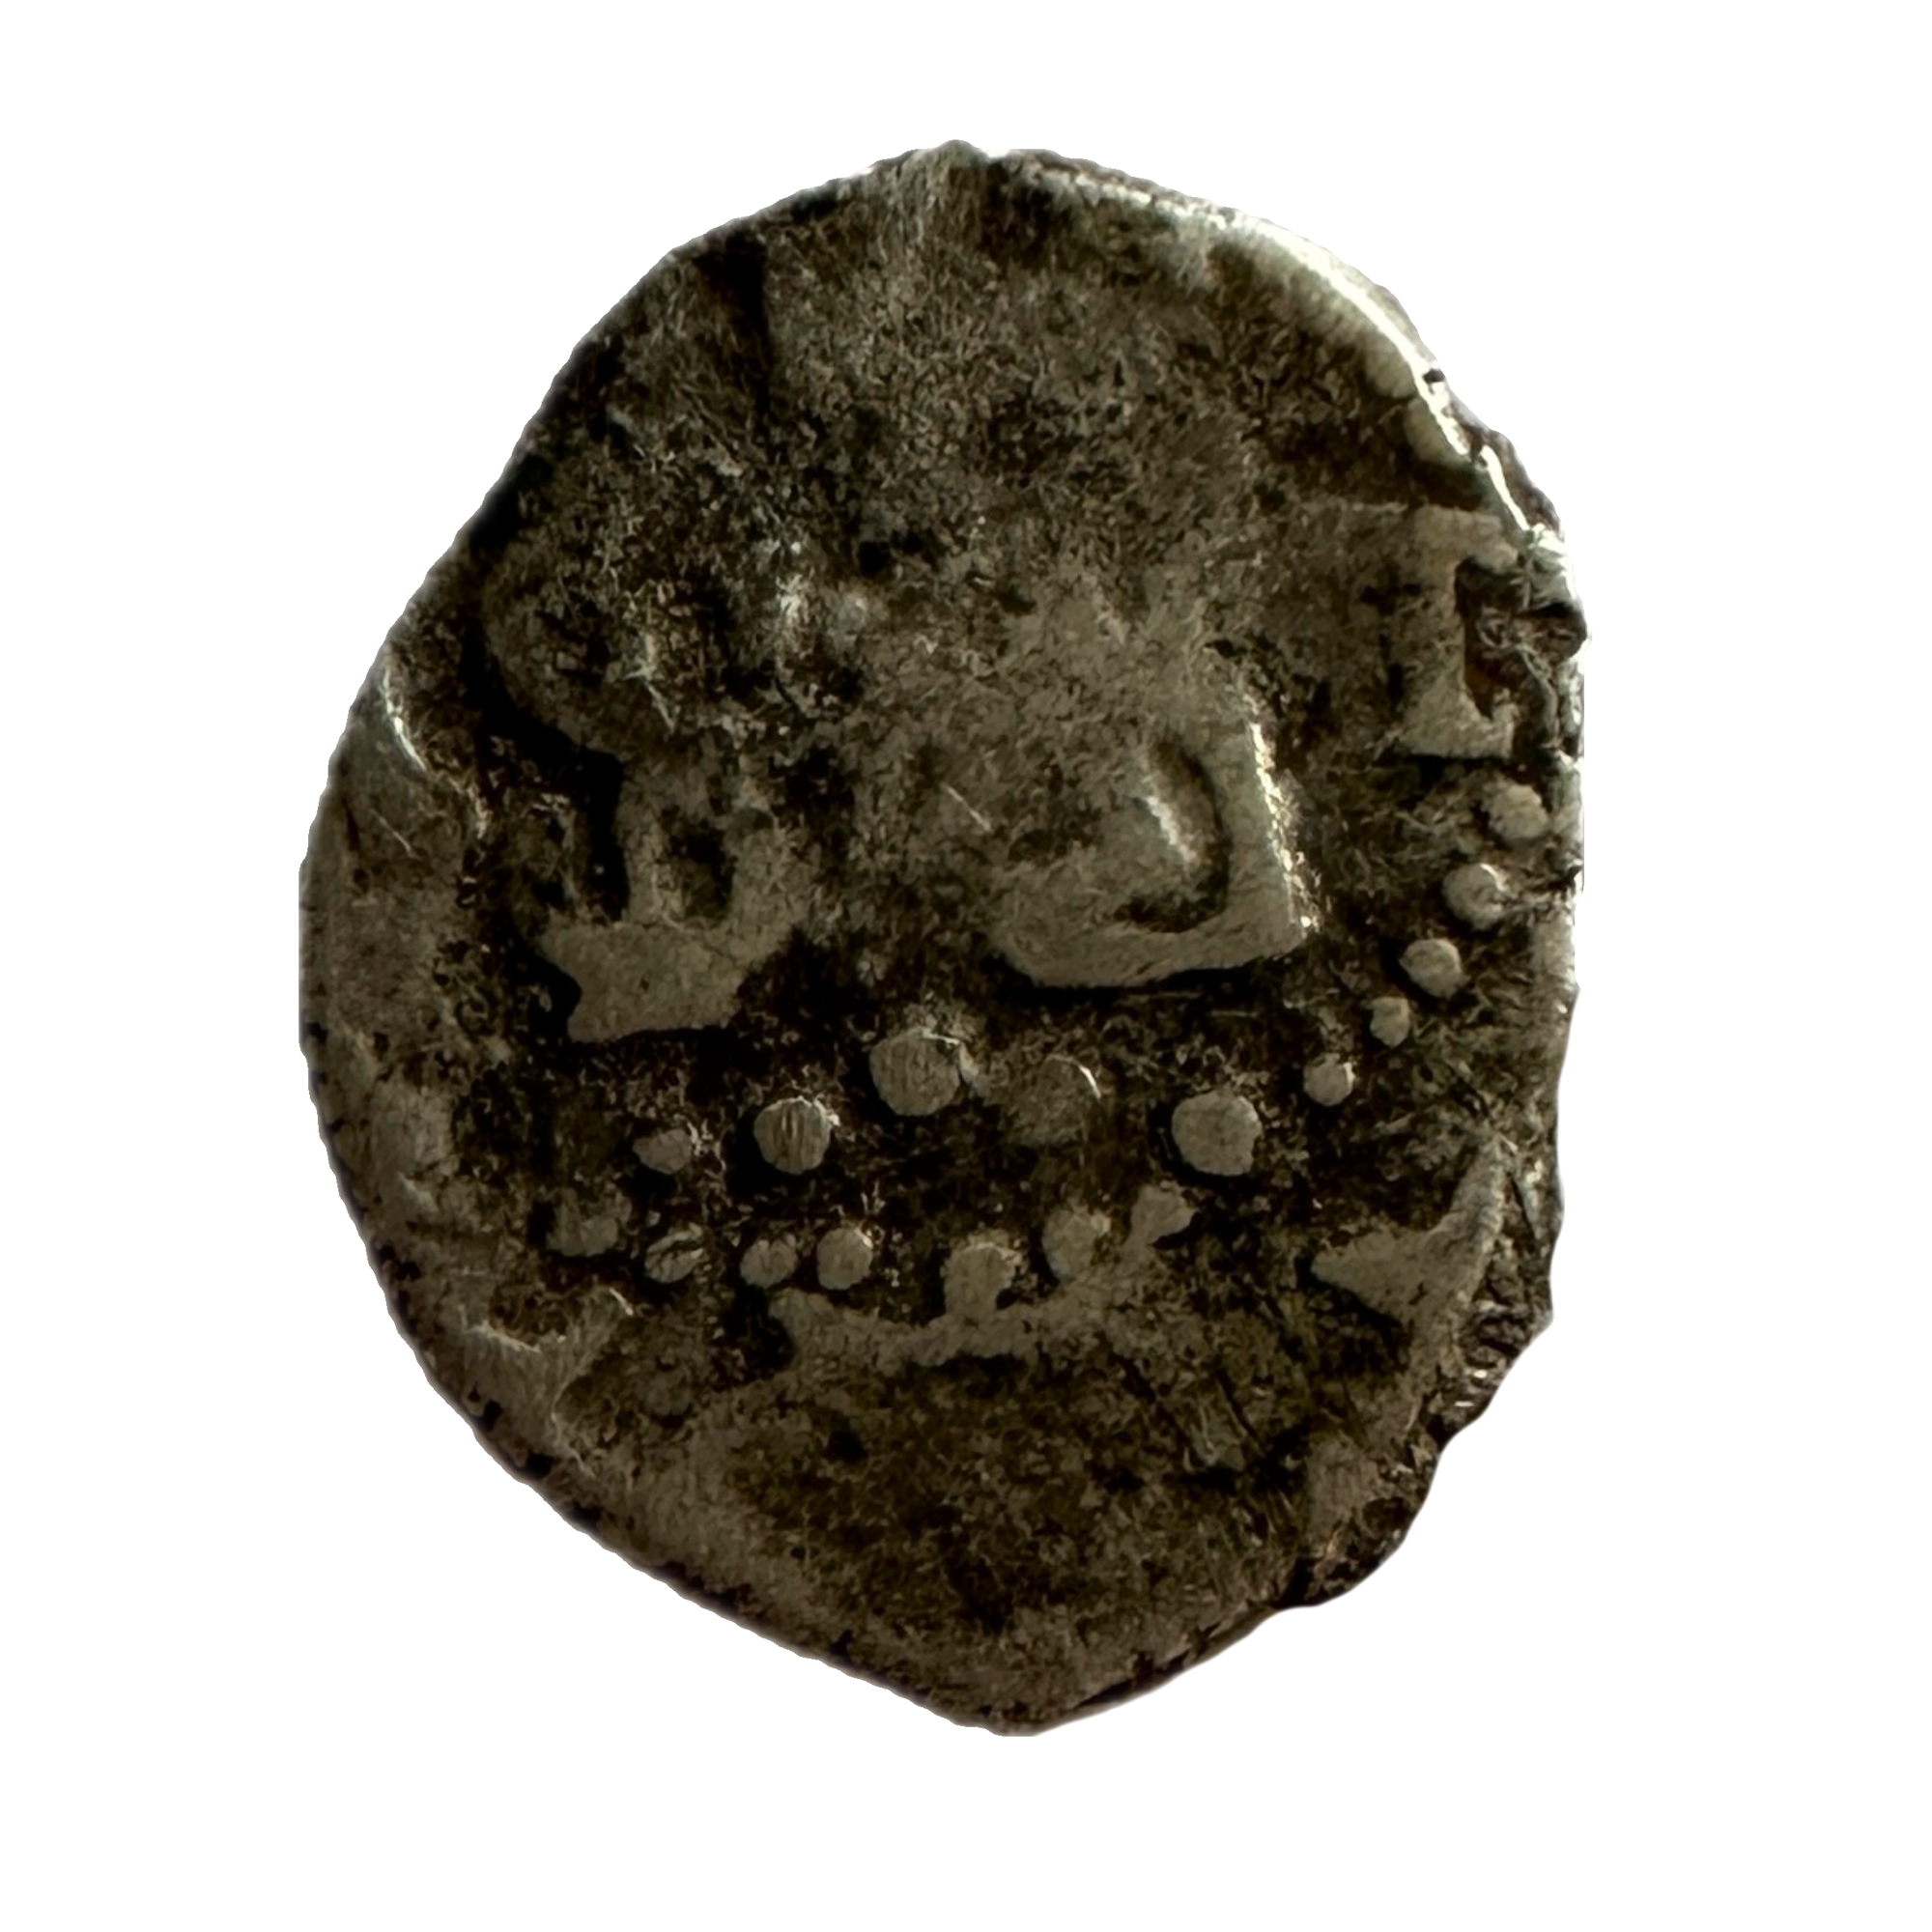 Shipwreck Silver coin, 1/2 Reale Cob Prehistoric Online